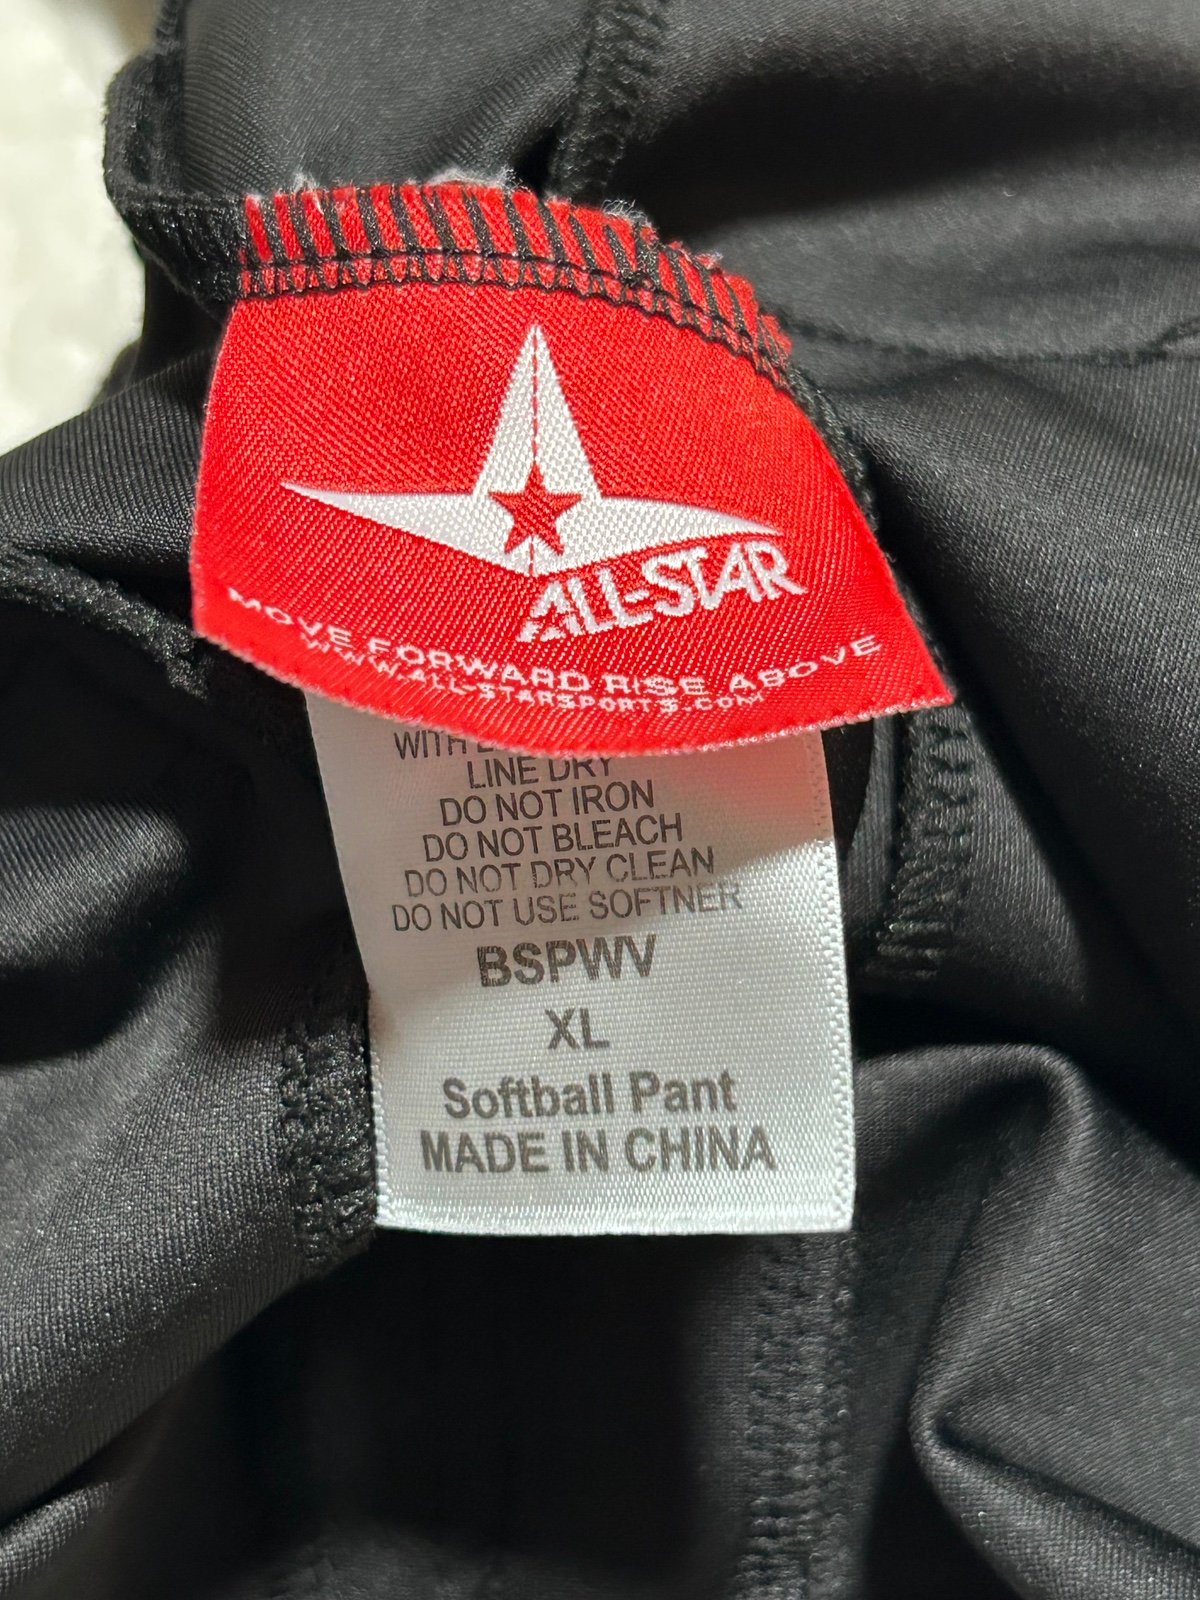 Discounted Women’s Juniors Size XL All-Star Softball Pants OtETn0qUb US Sale